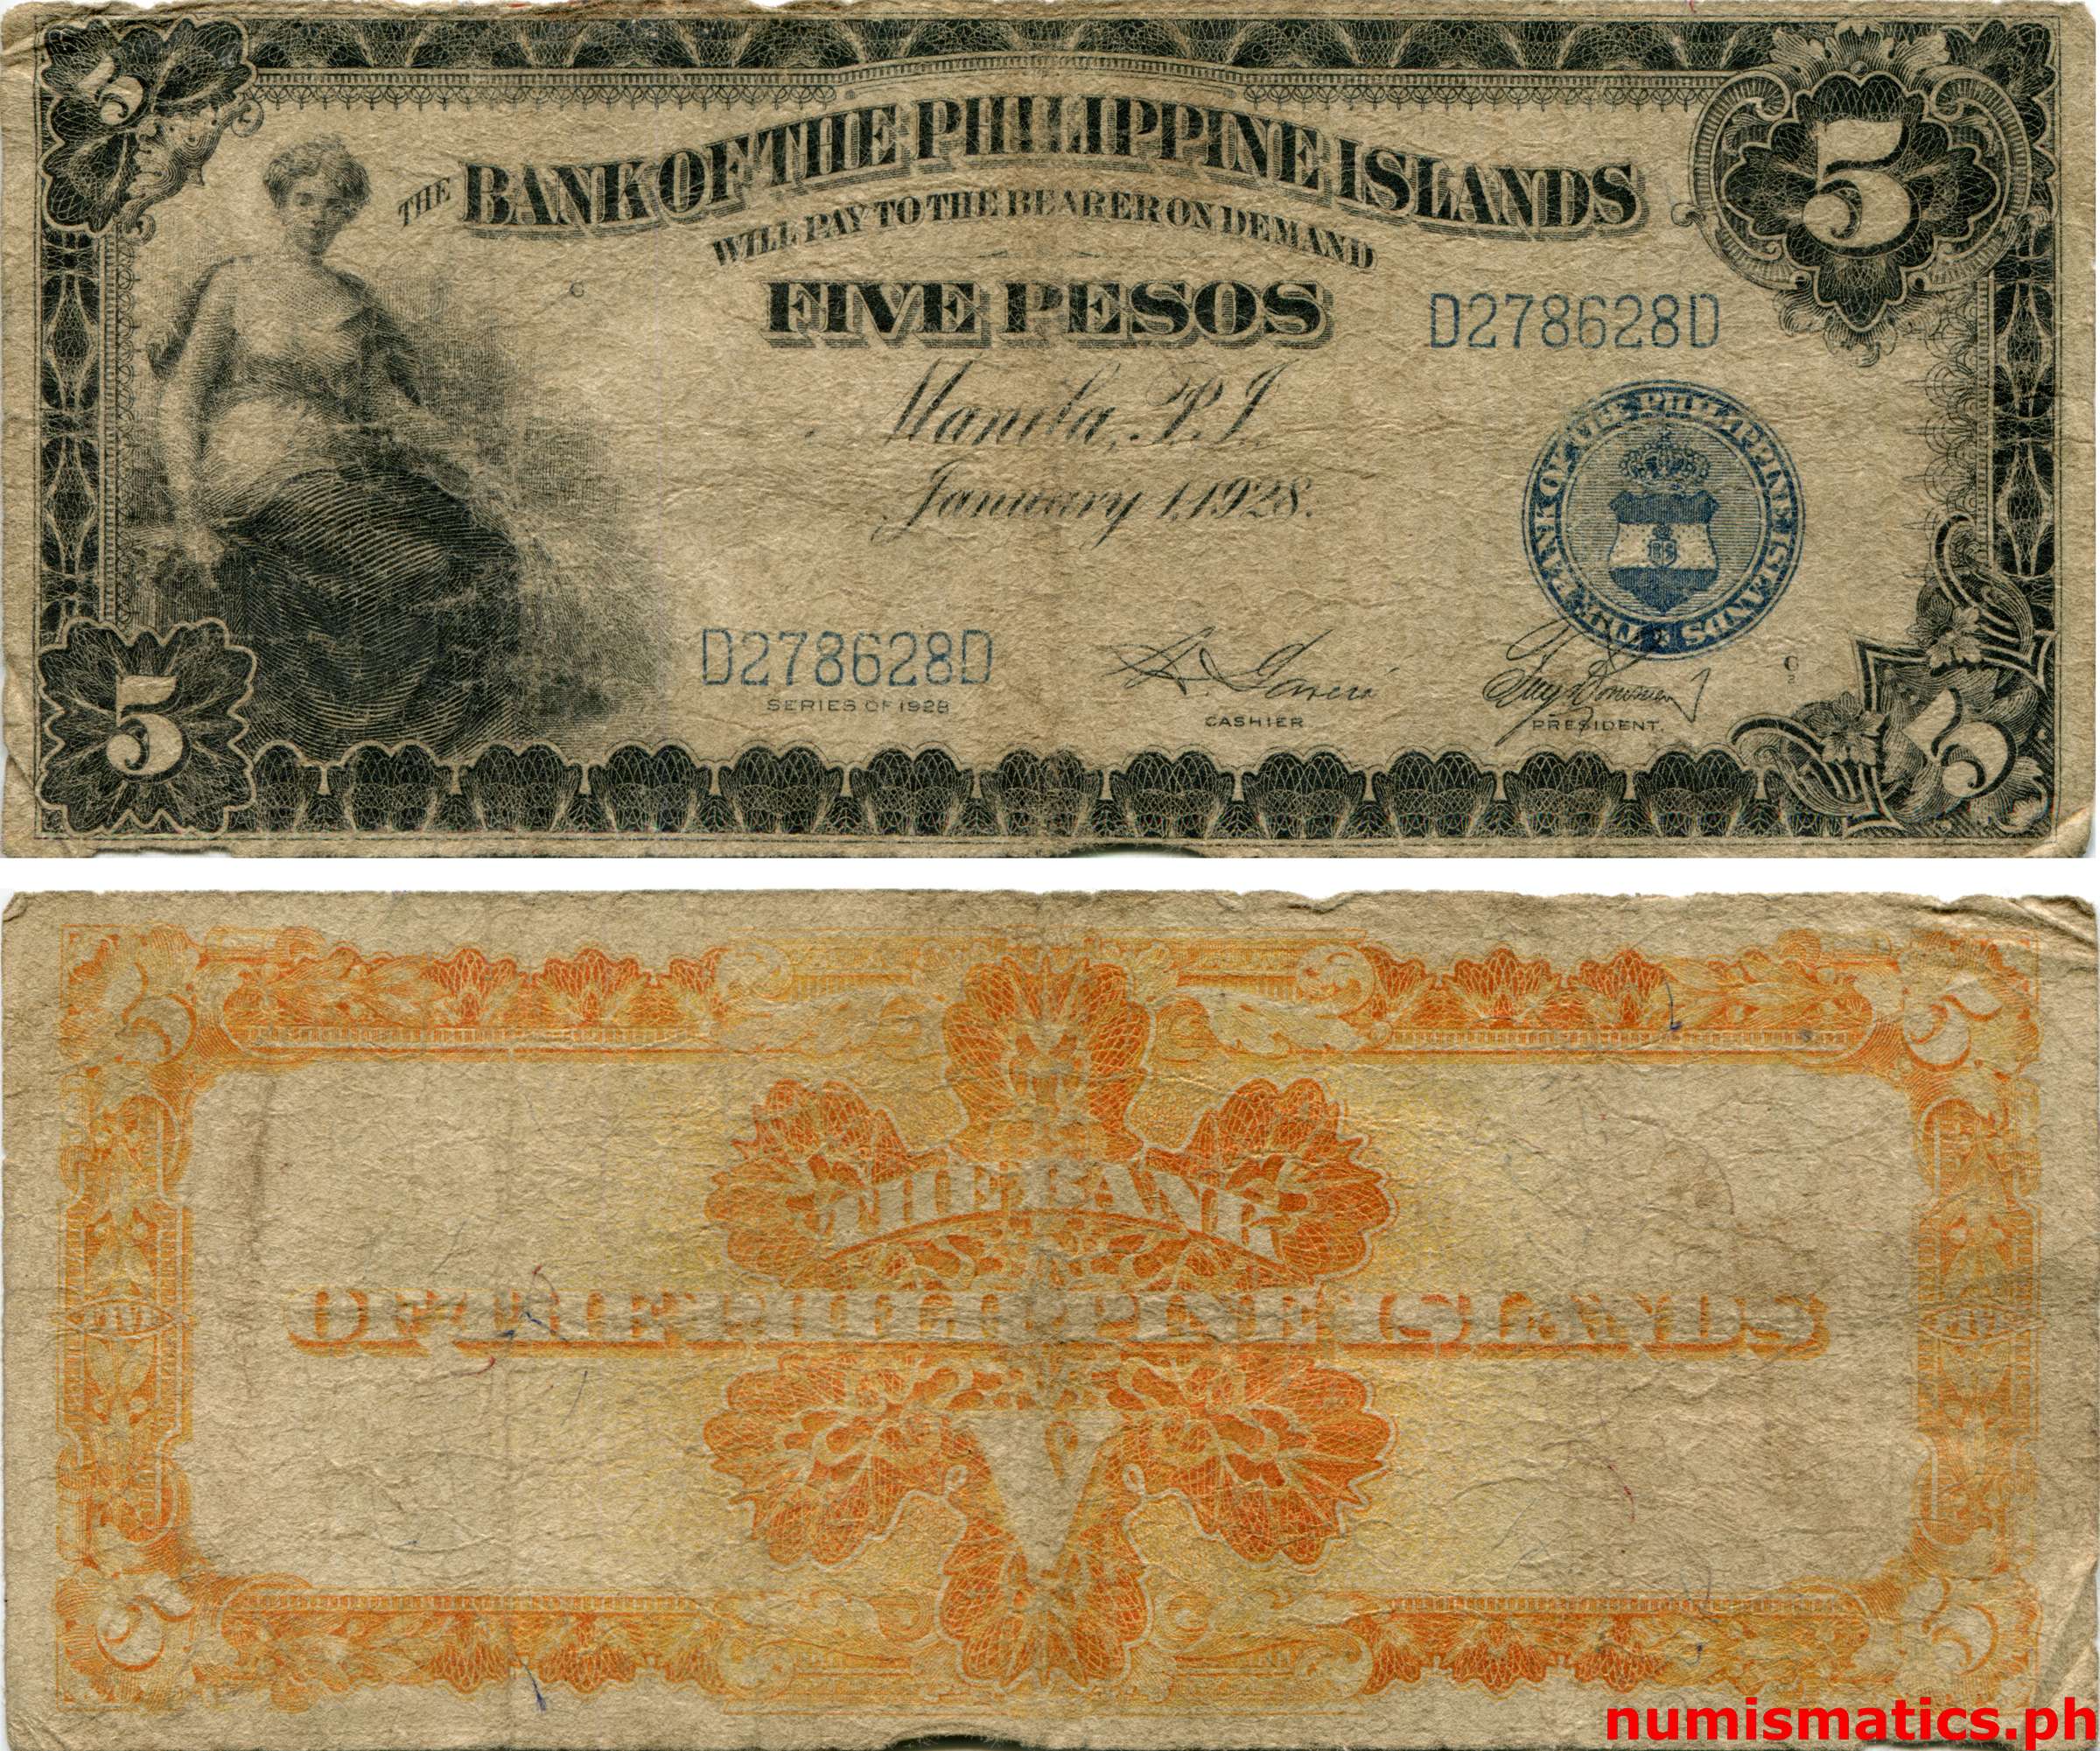 1928 5 Pesos Garcia - Borromeo Bank of the Philippine Islands Circulating Note